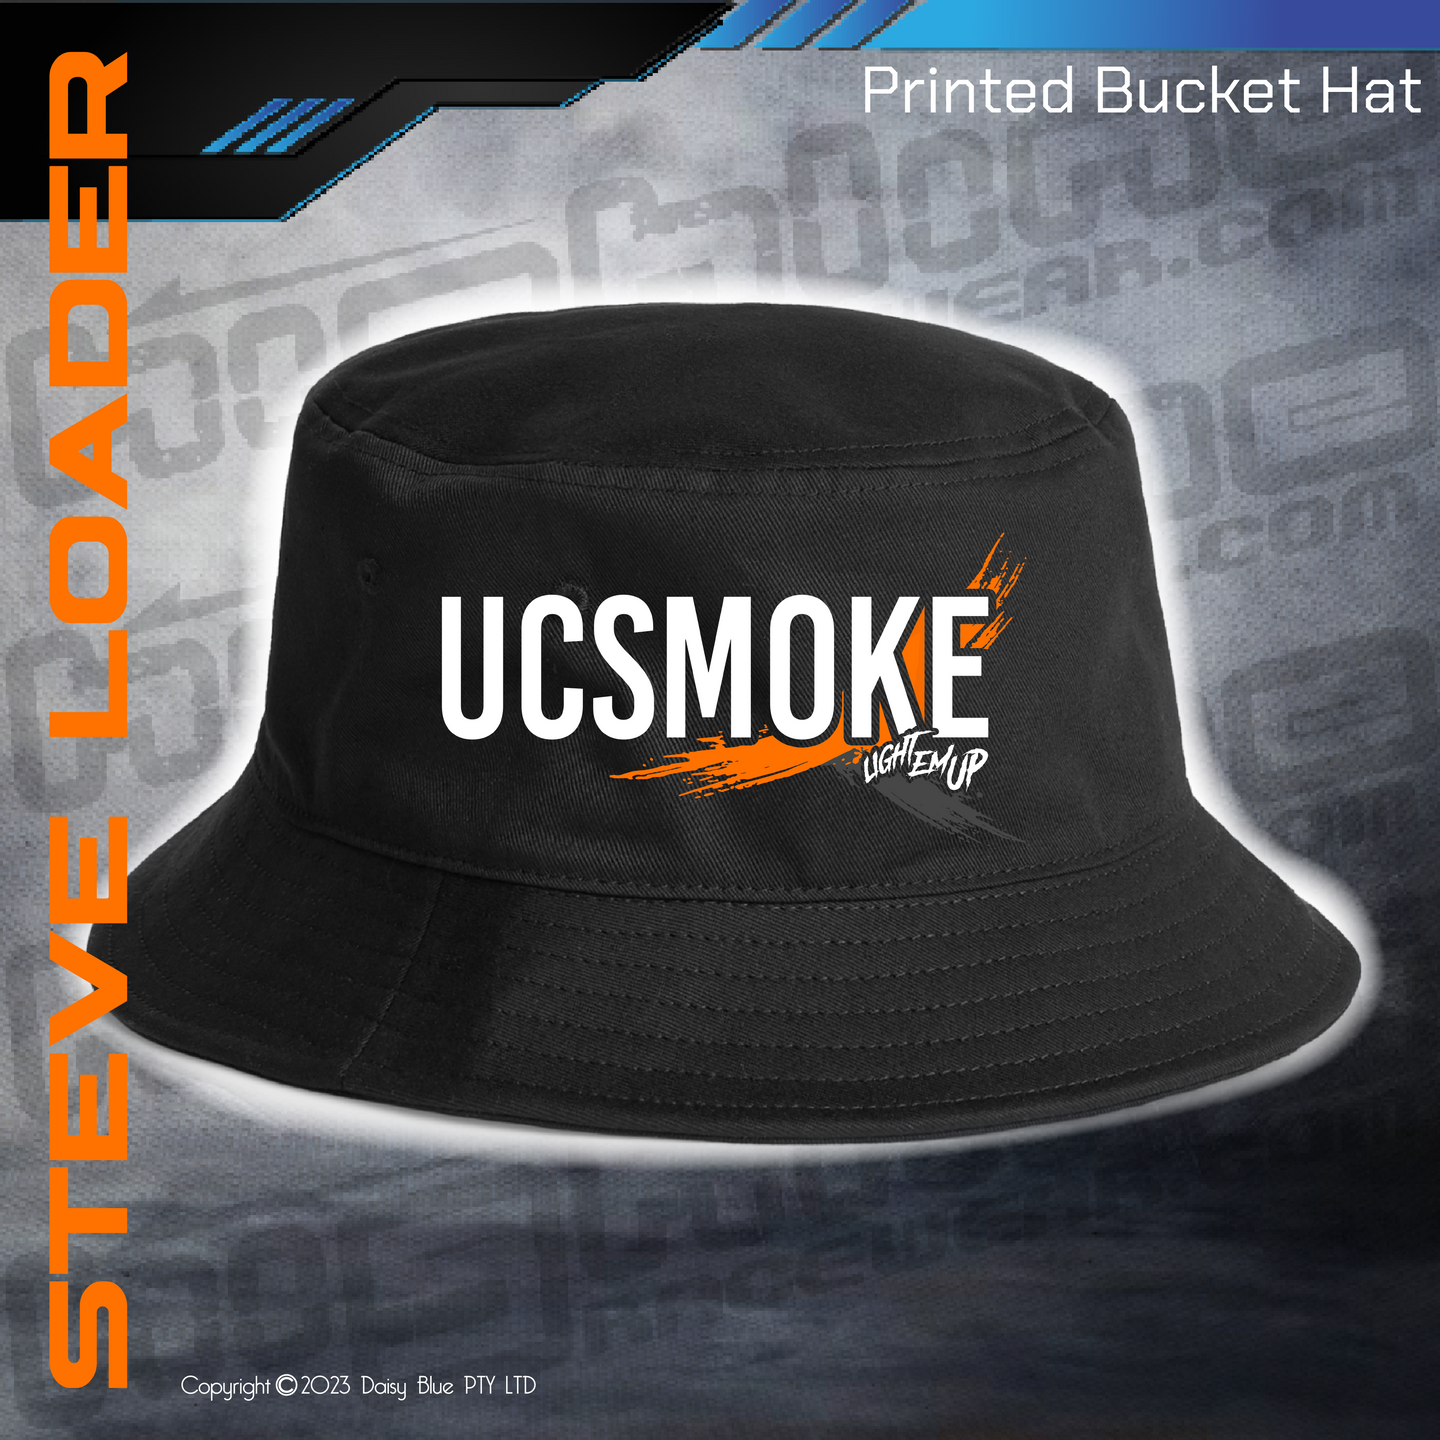 Printed Bucket Hat - UCSmoke Light Em Up